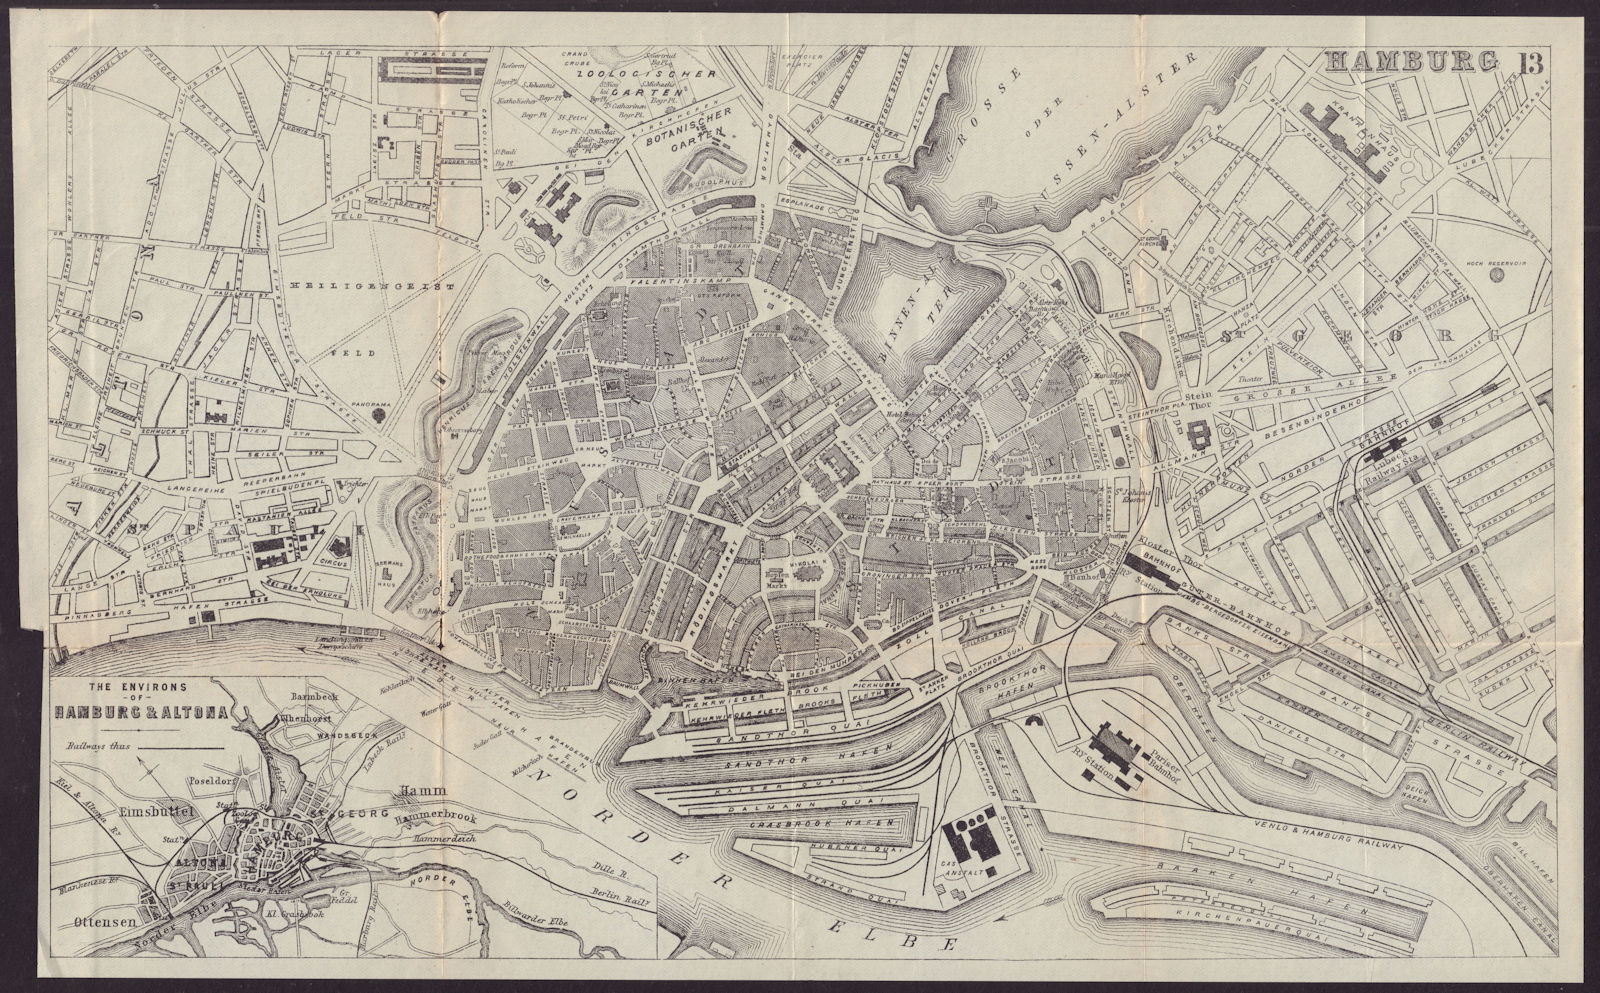 Associate Product HAMBURG antique town plan city map. Germany. BRADSHAW c1899 old